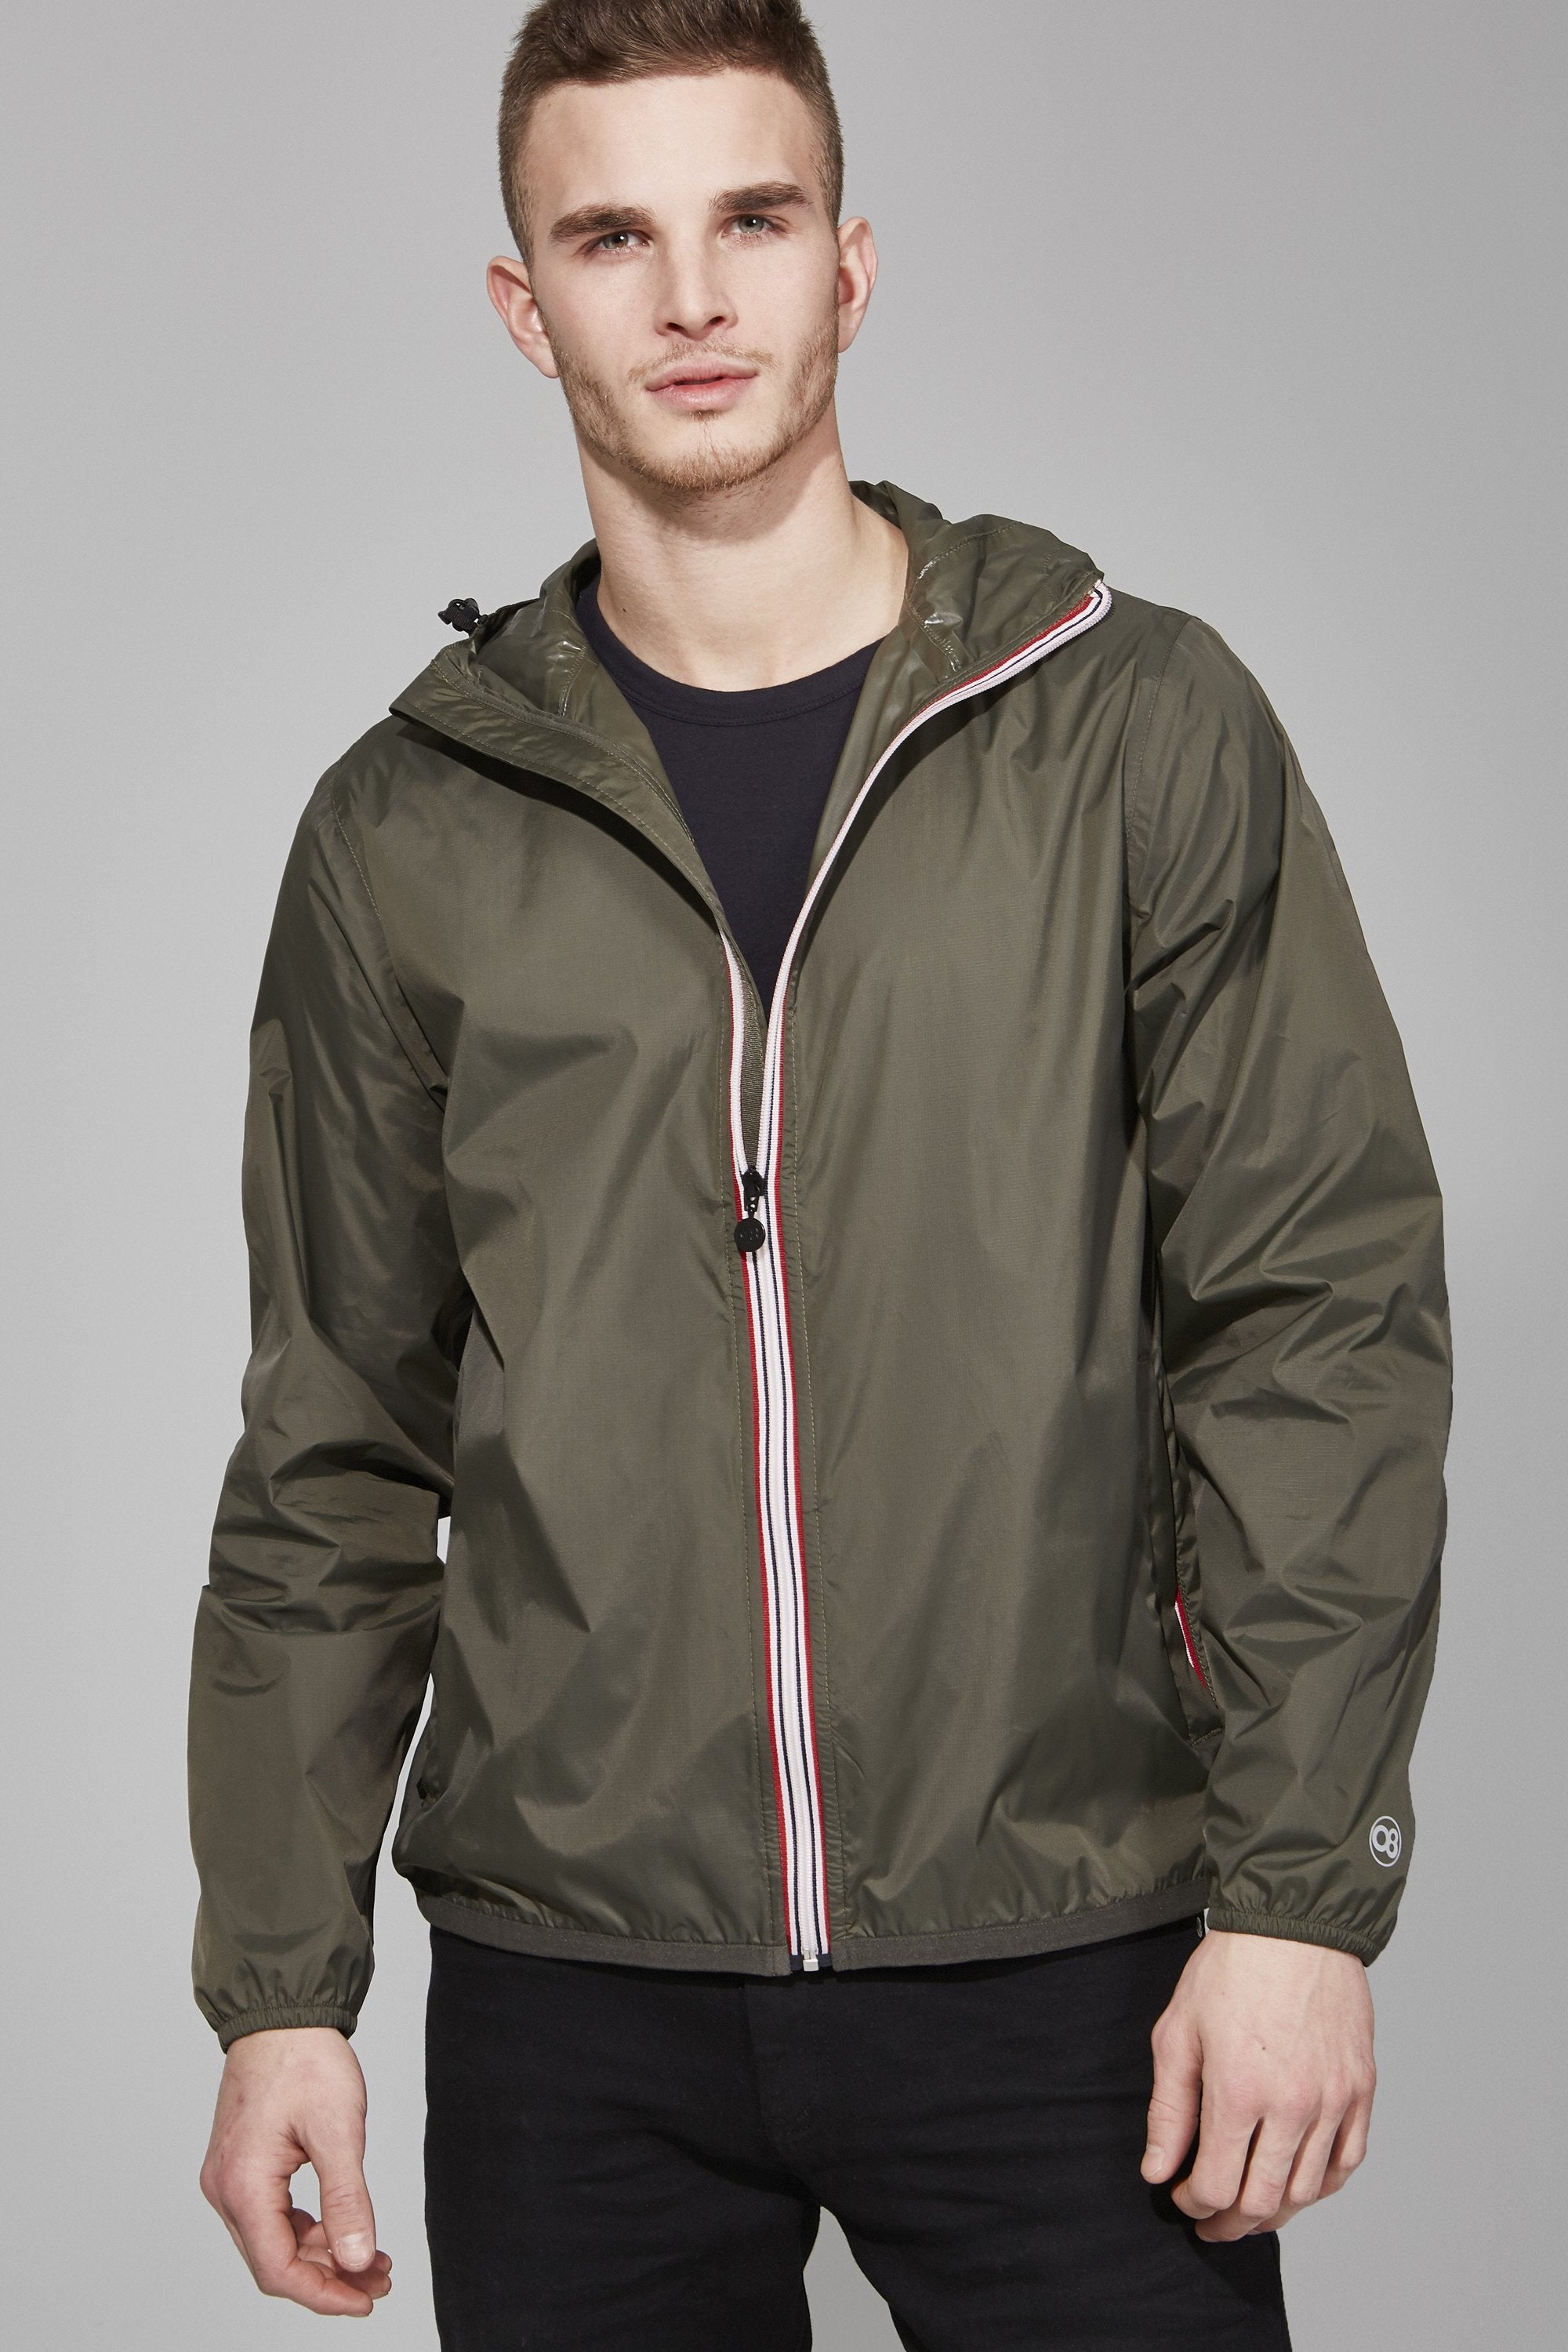 Picture of a Men's Full Zip Olive Green Waterproof Rain Jacket front view